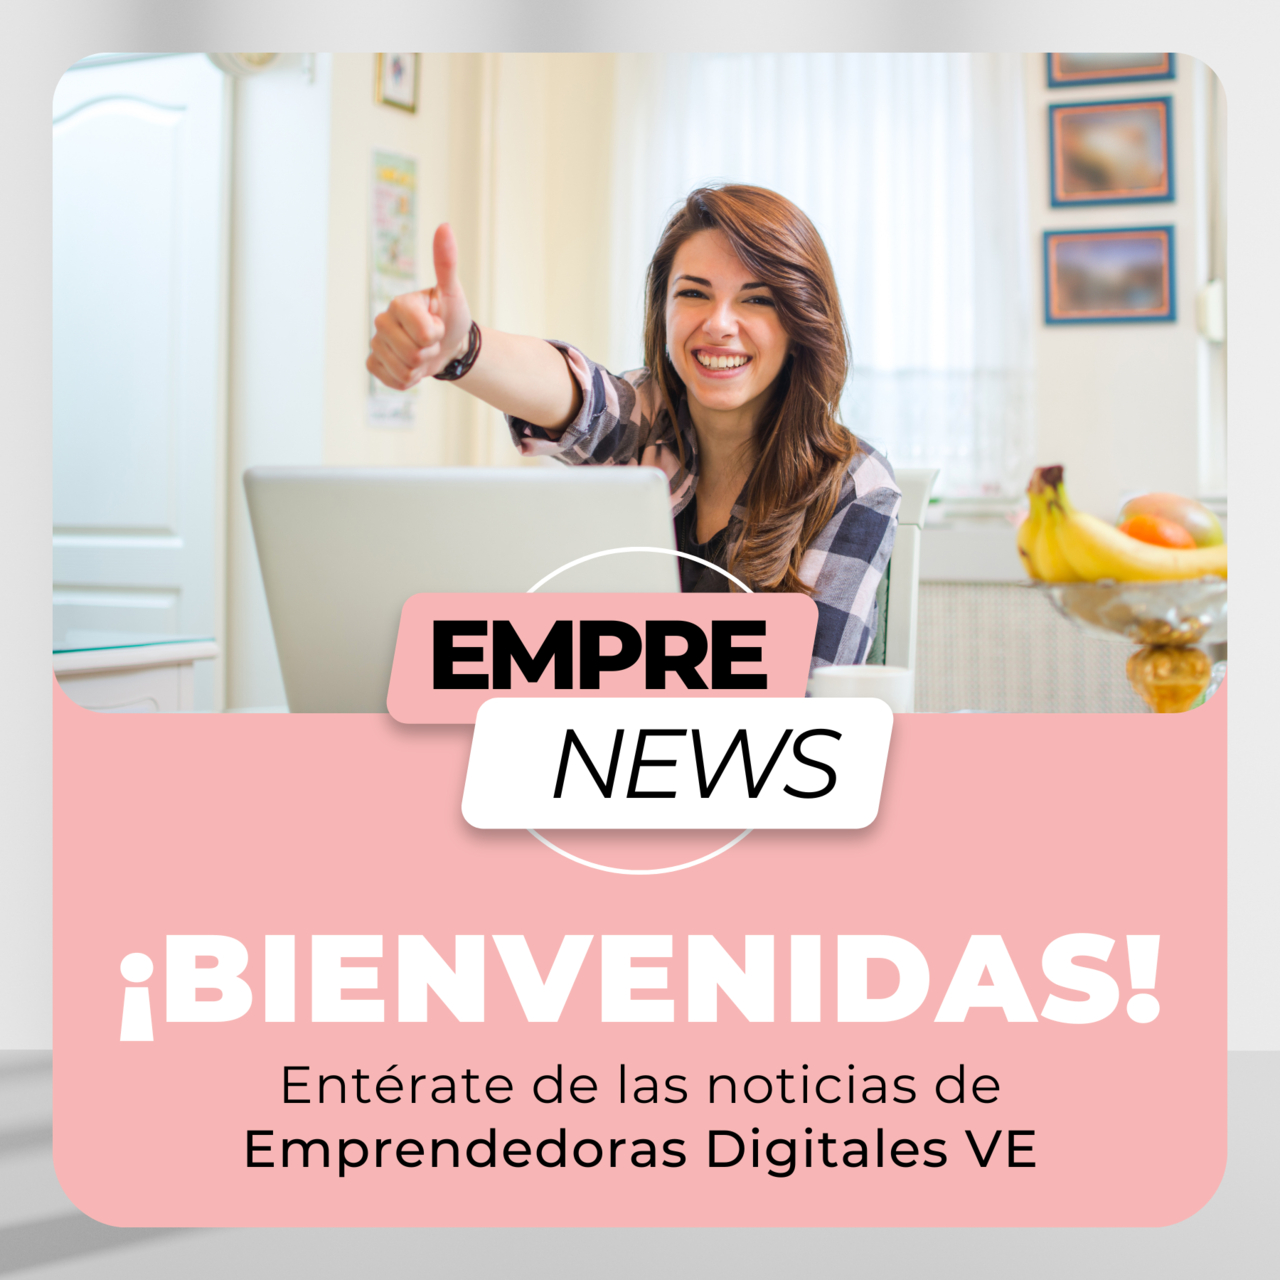 EmpreNews by Emprendedoras Digitales VE